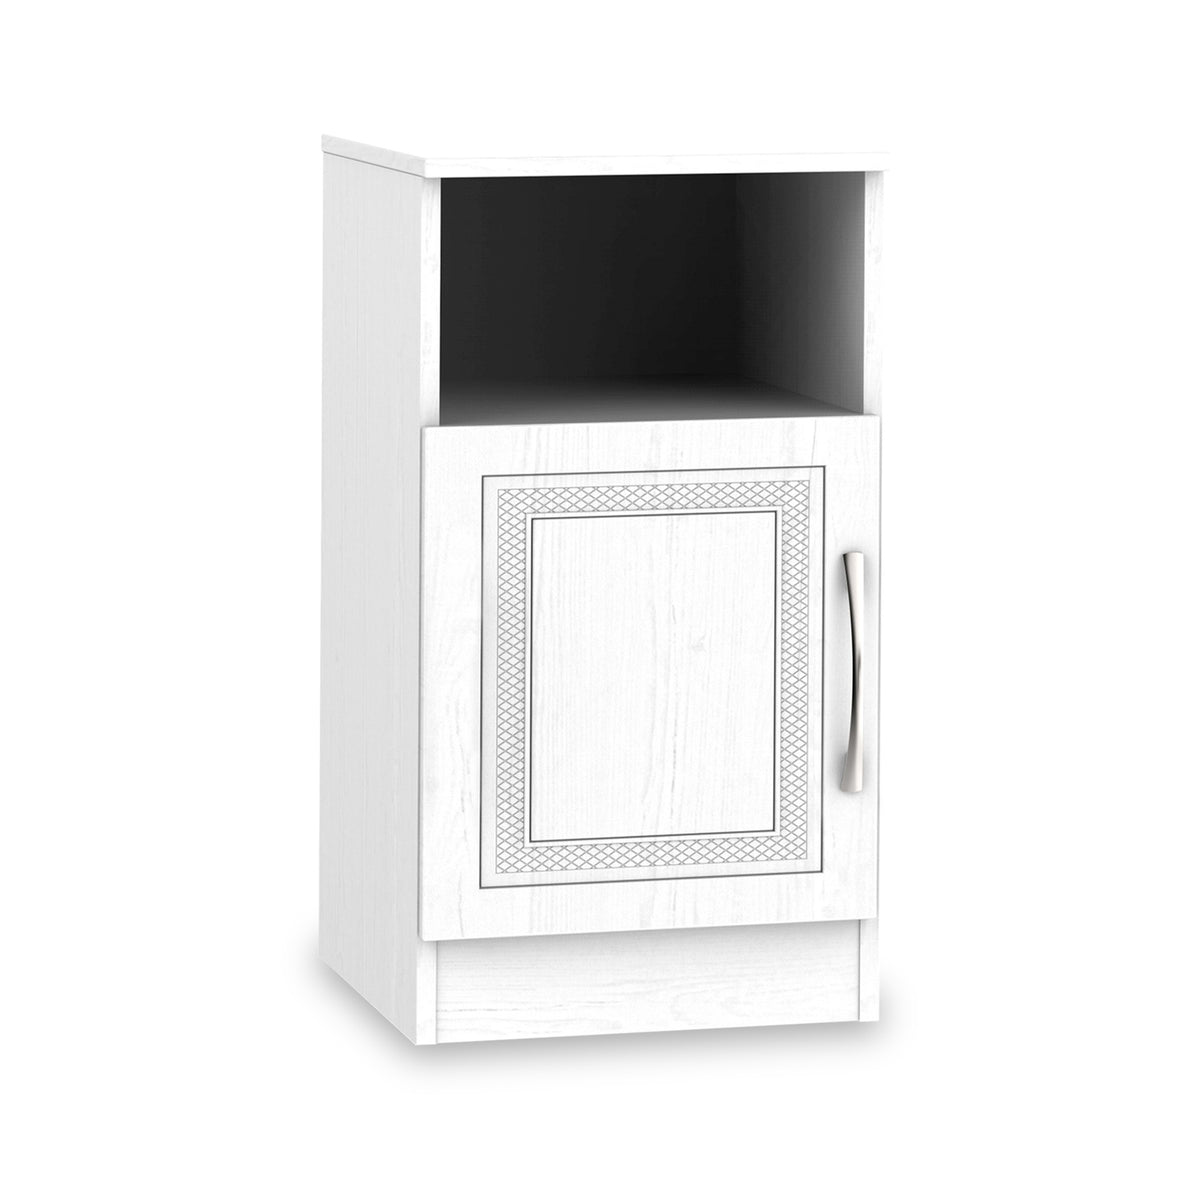 Kilgarth 1 Door Cabinet from Roseland Furniture